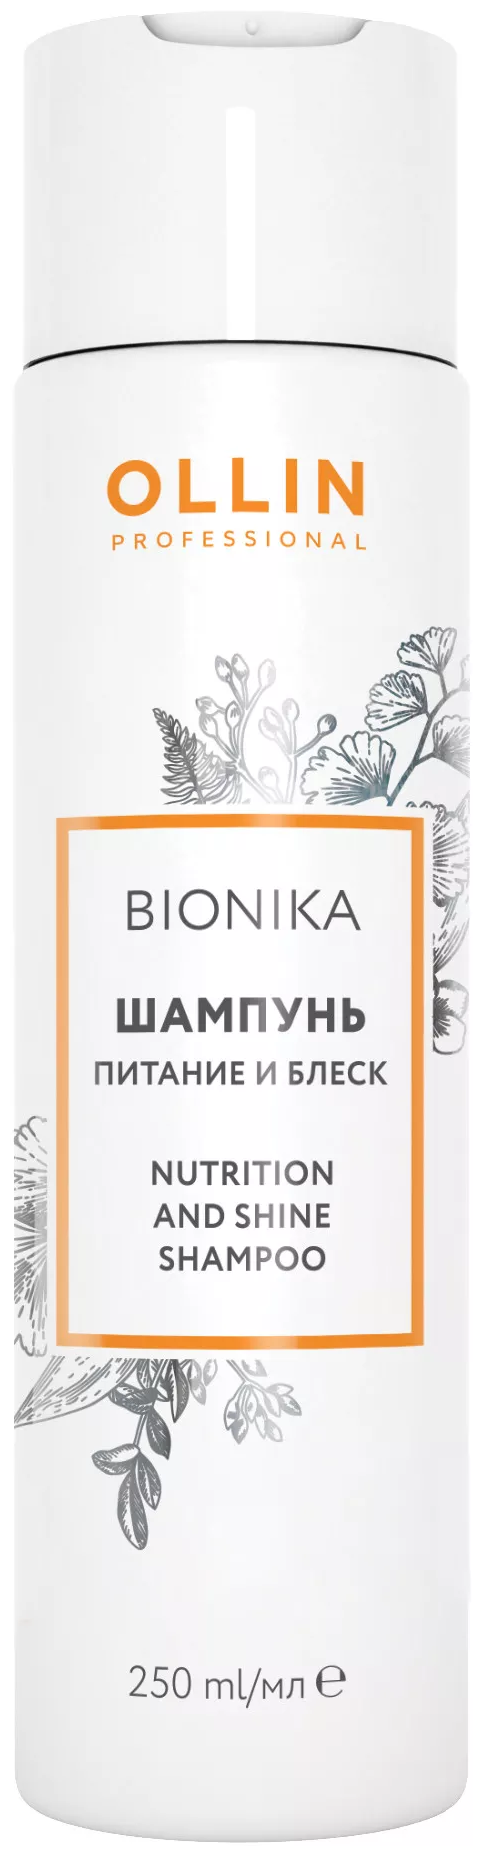 OLLIN Professional шампунь Bionika Nutrition And Shine Питание и блеск, 250 мл